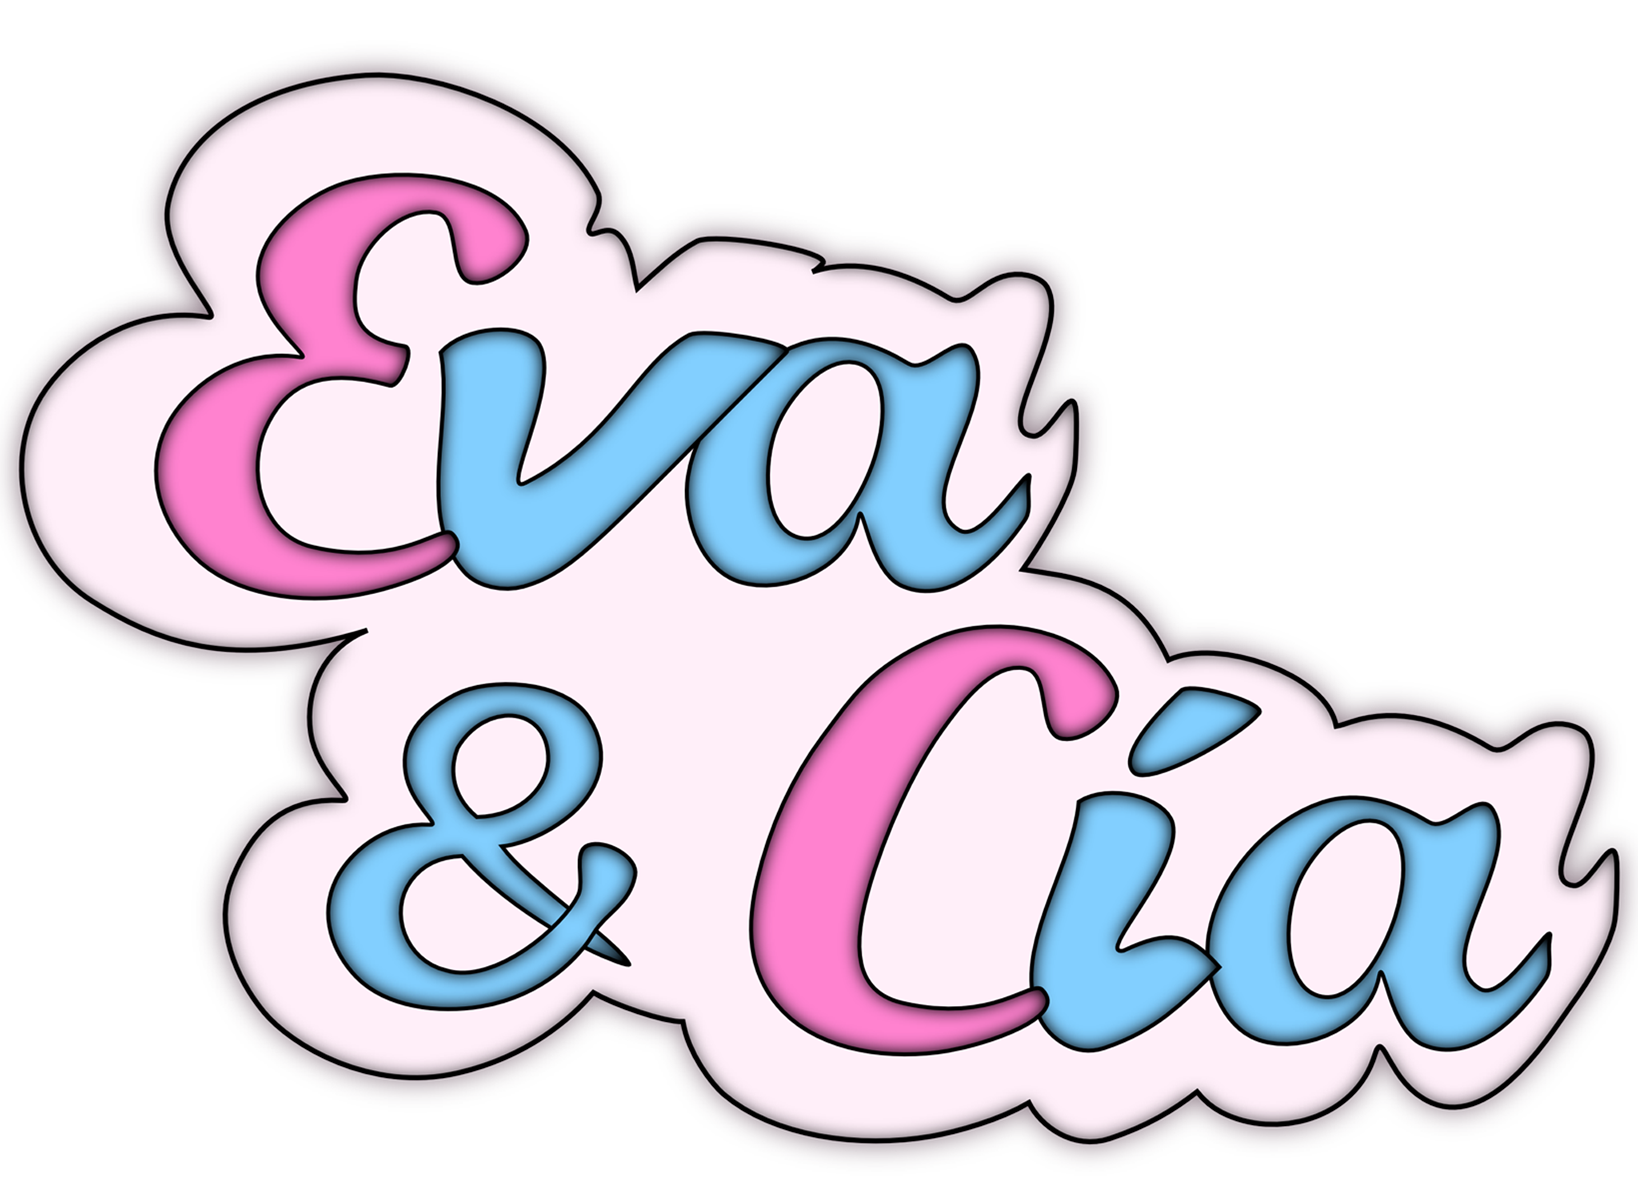 Eva & Cia